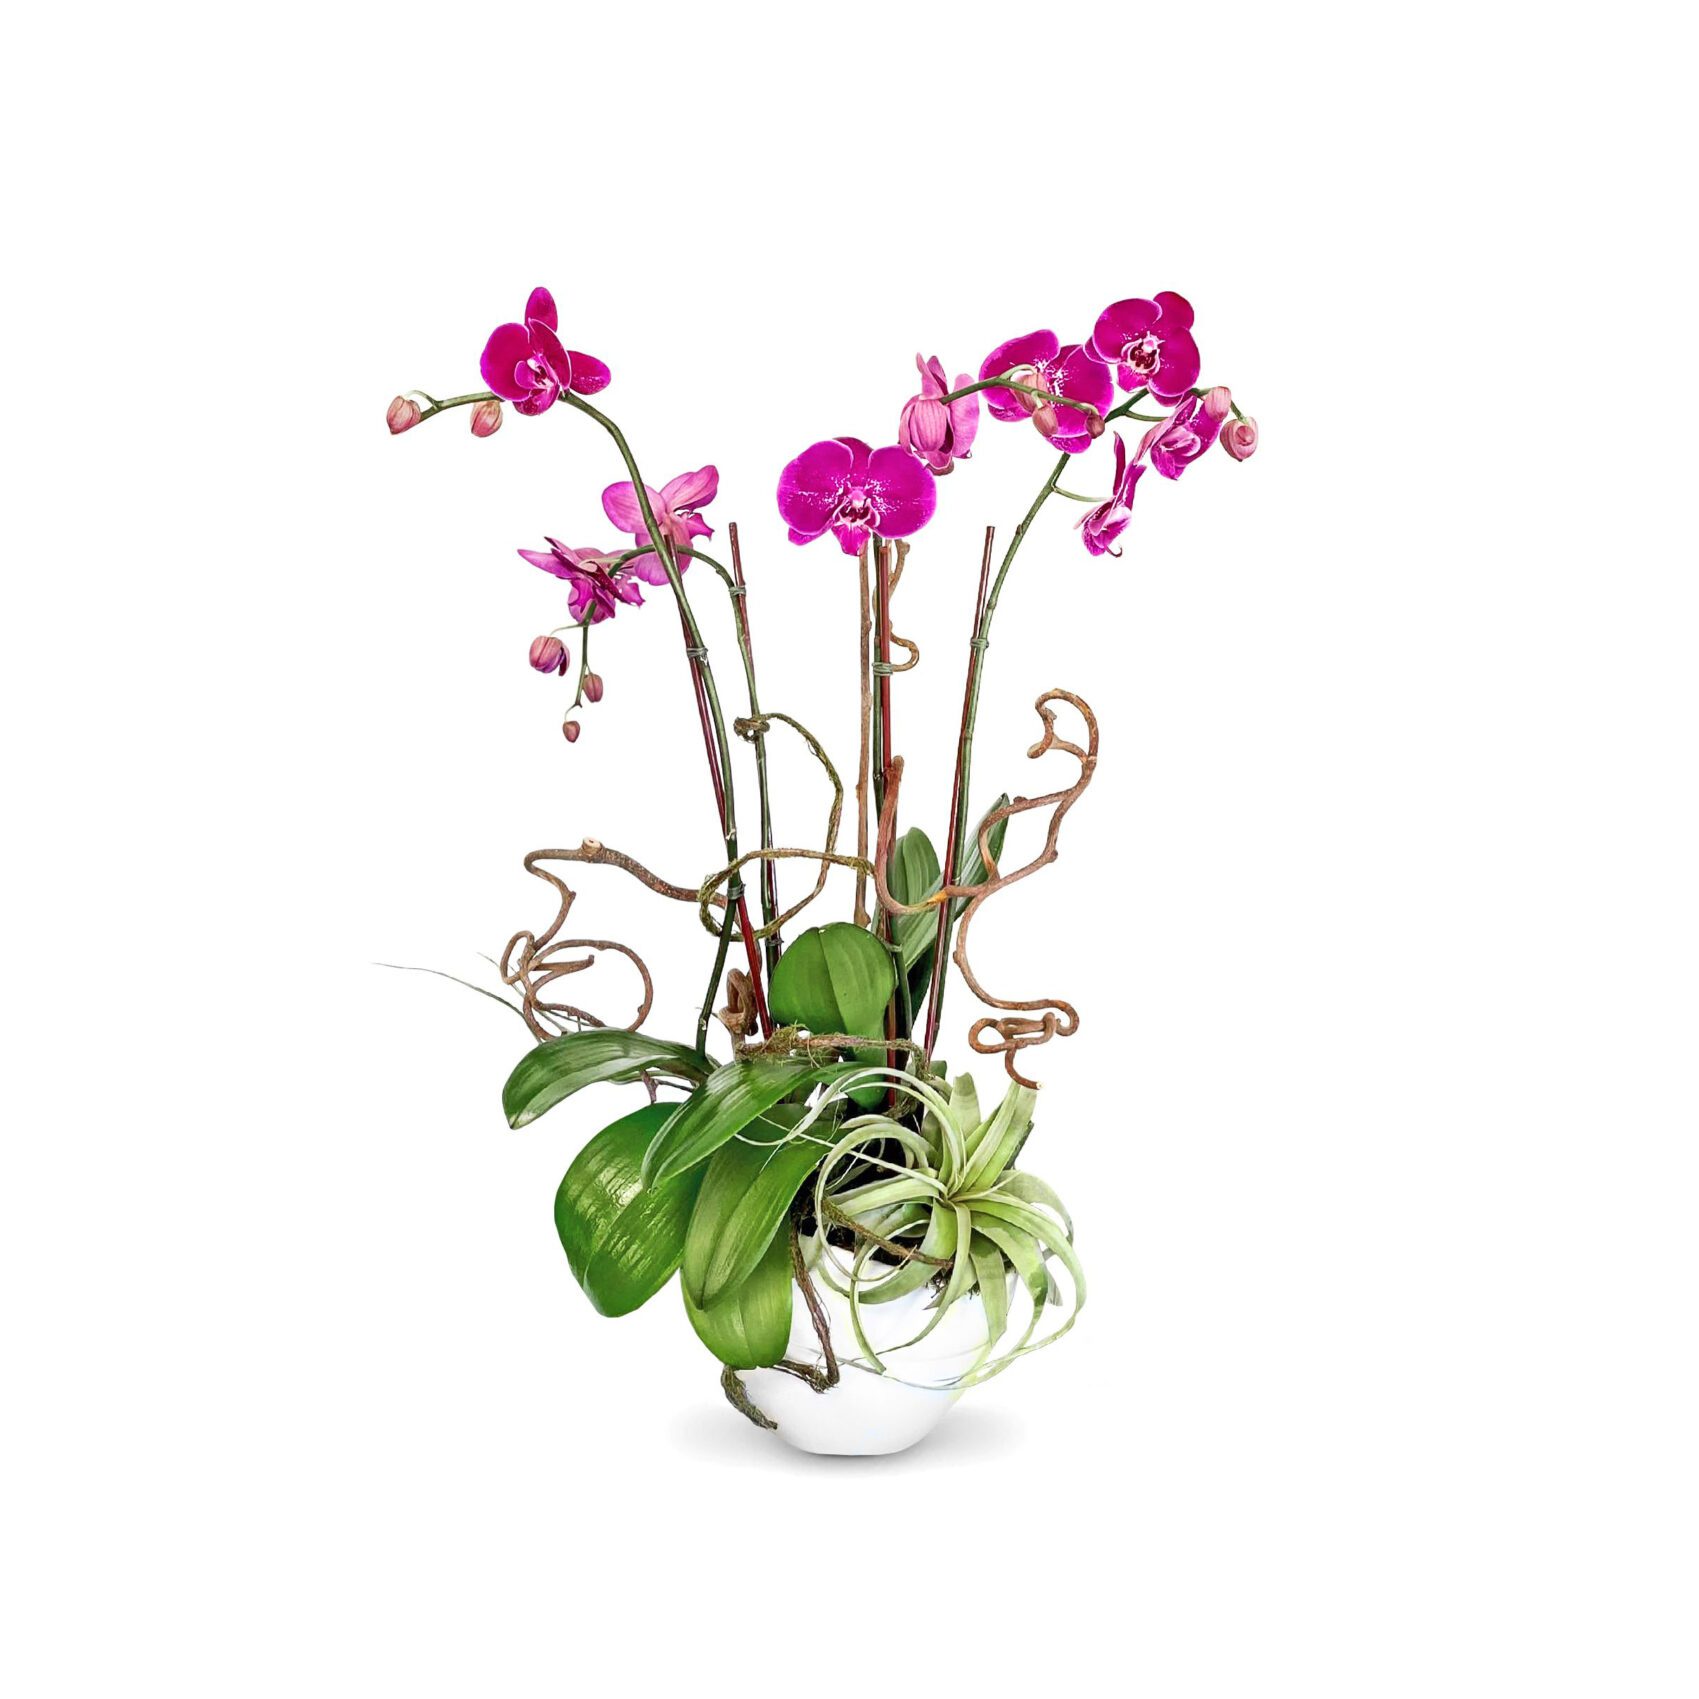 tia 1 Tia: Four Purple Orchids with Air-plants and Kiwi Vine